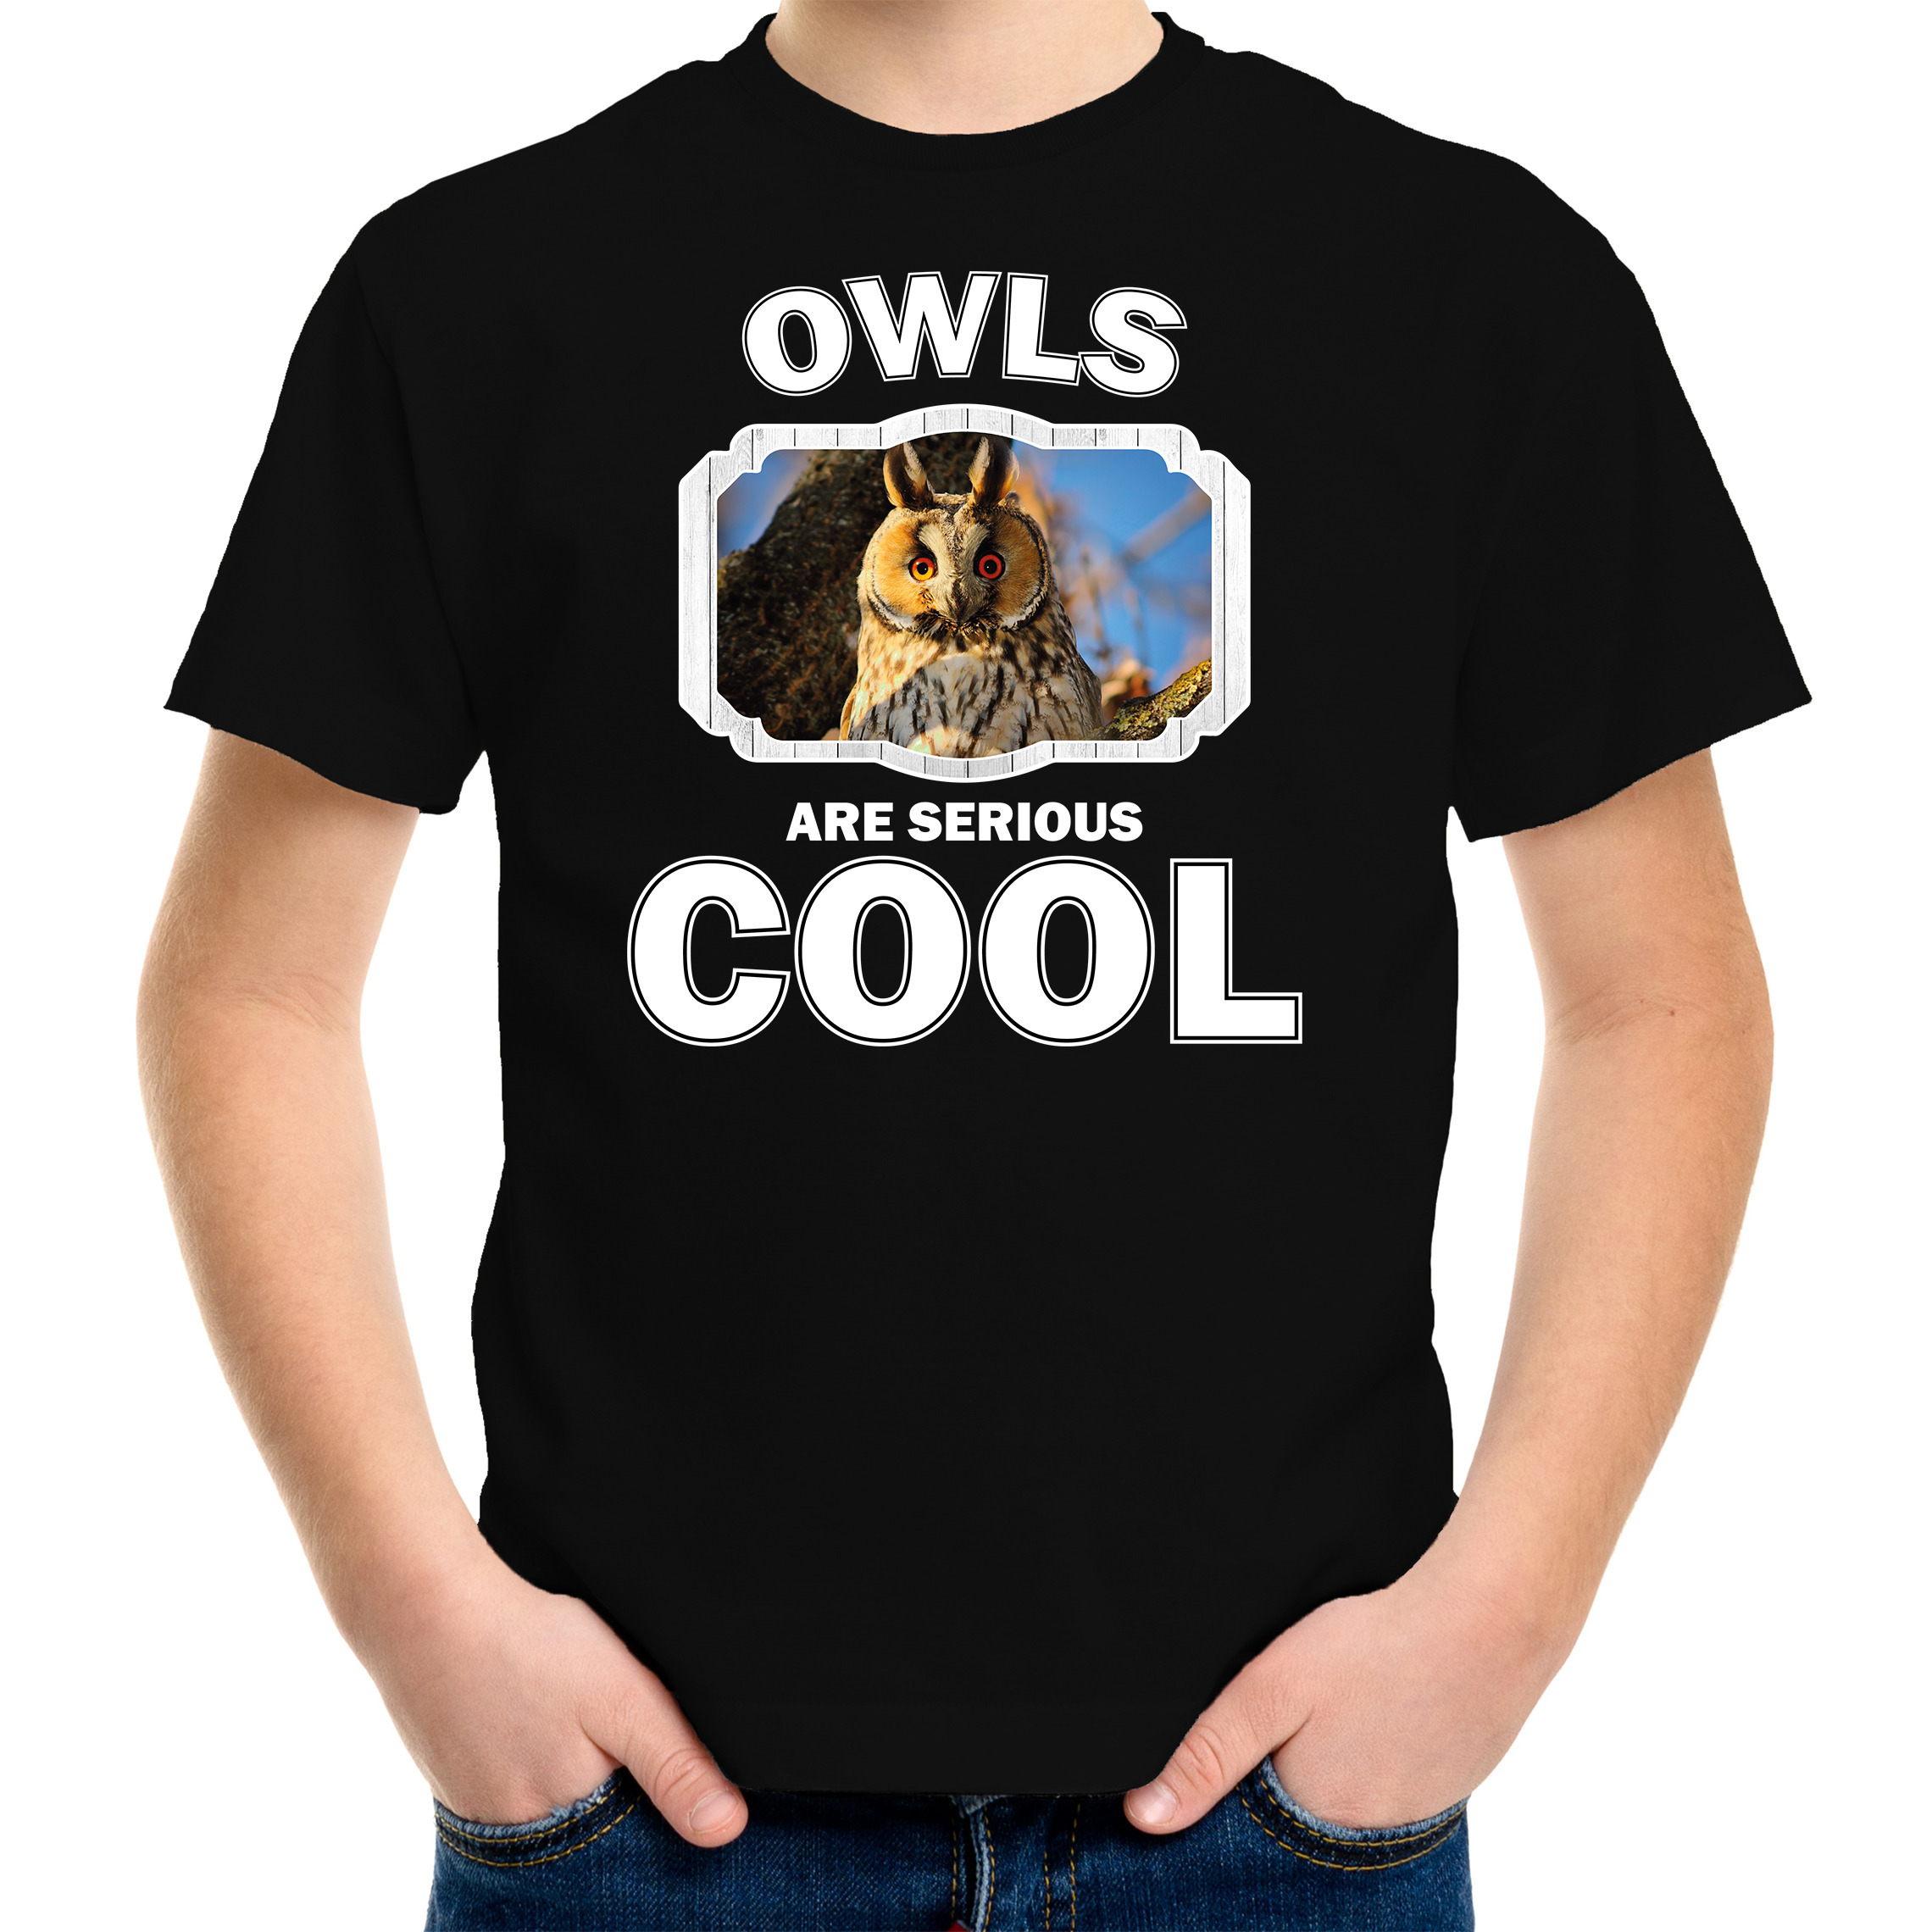 Dieren ransuil t-shirt zwart kinderen owls are cool shirt jongens en meisjes